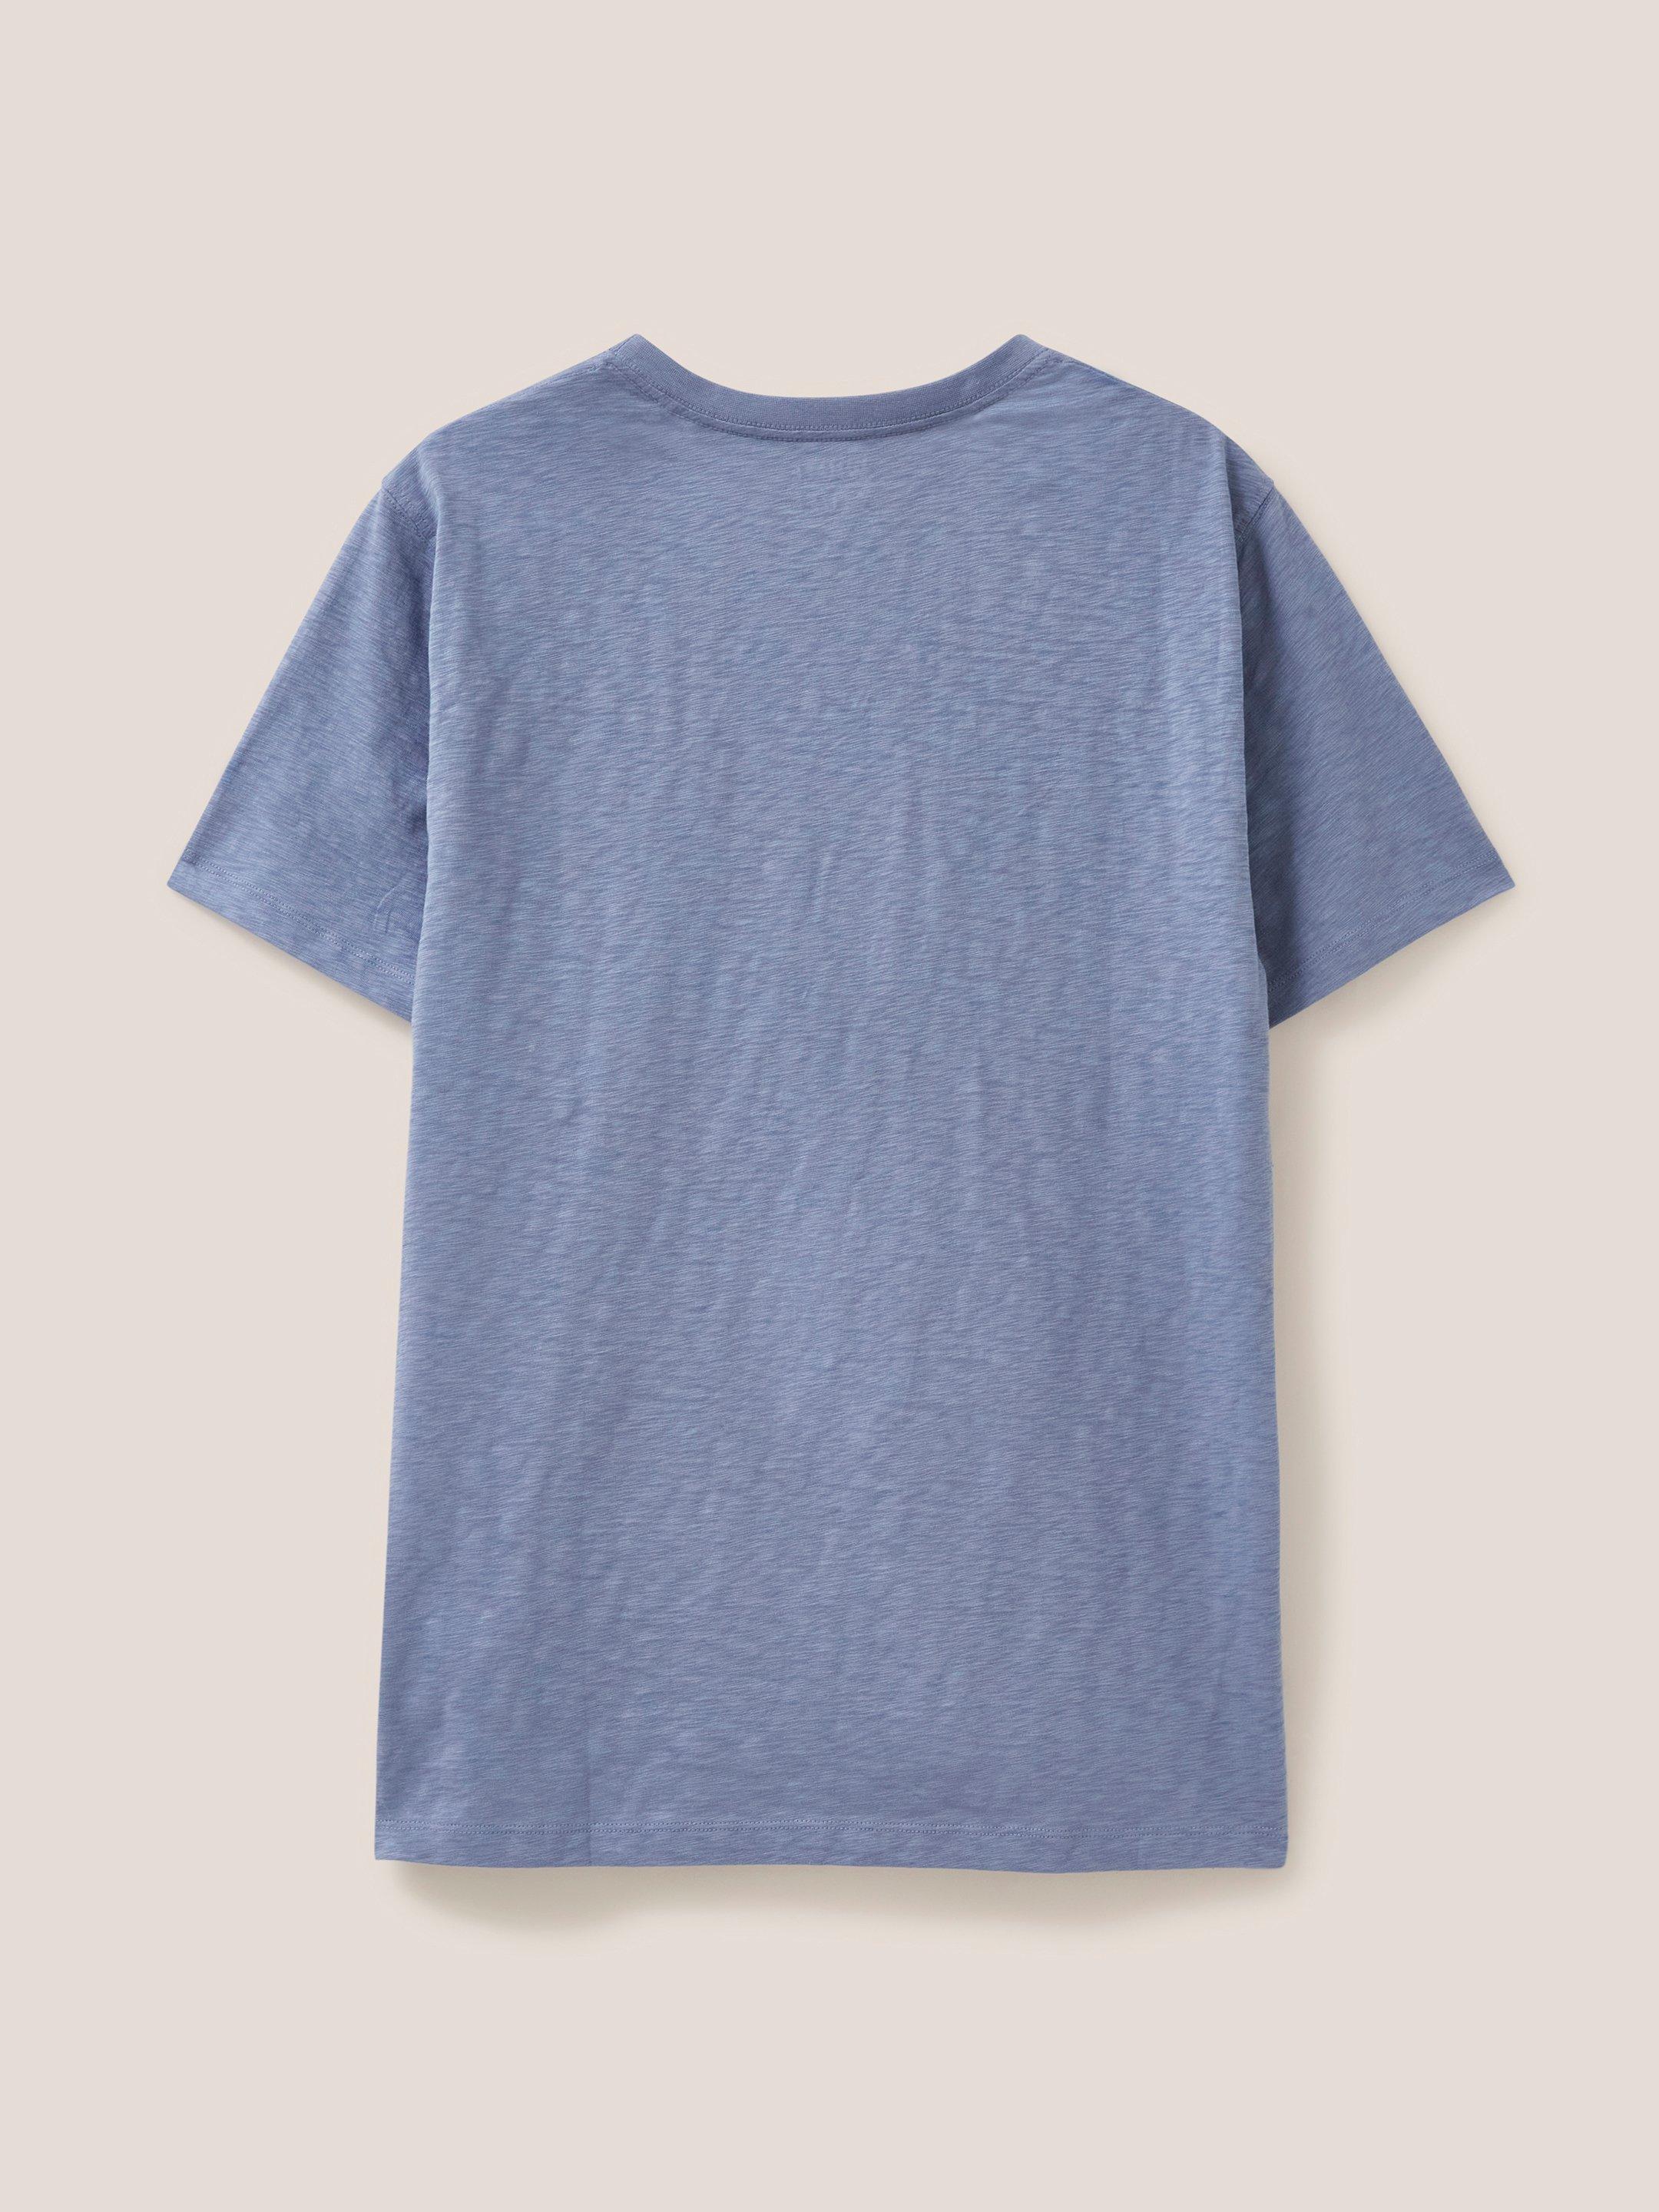 Superkilen Graphic Tshirt in MID BLUE - FLAT BACK